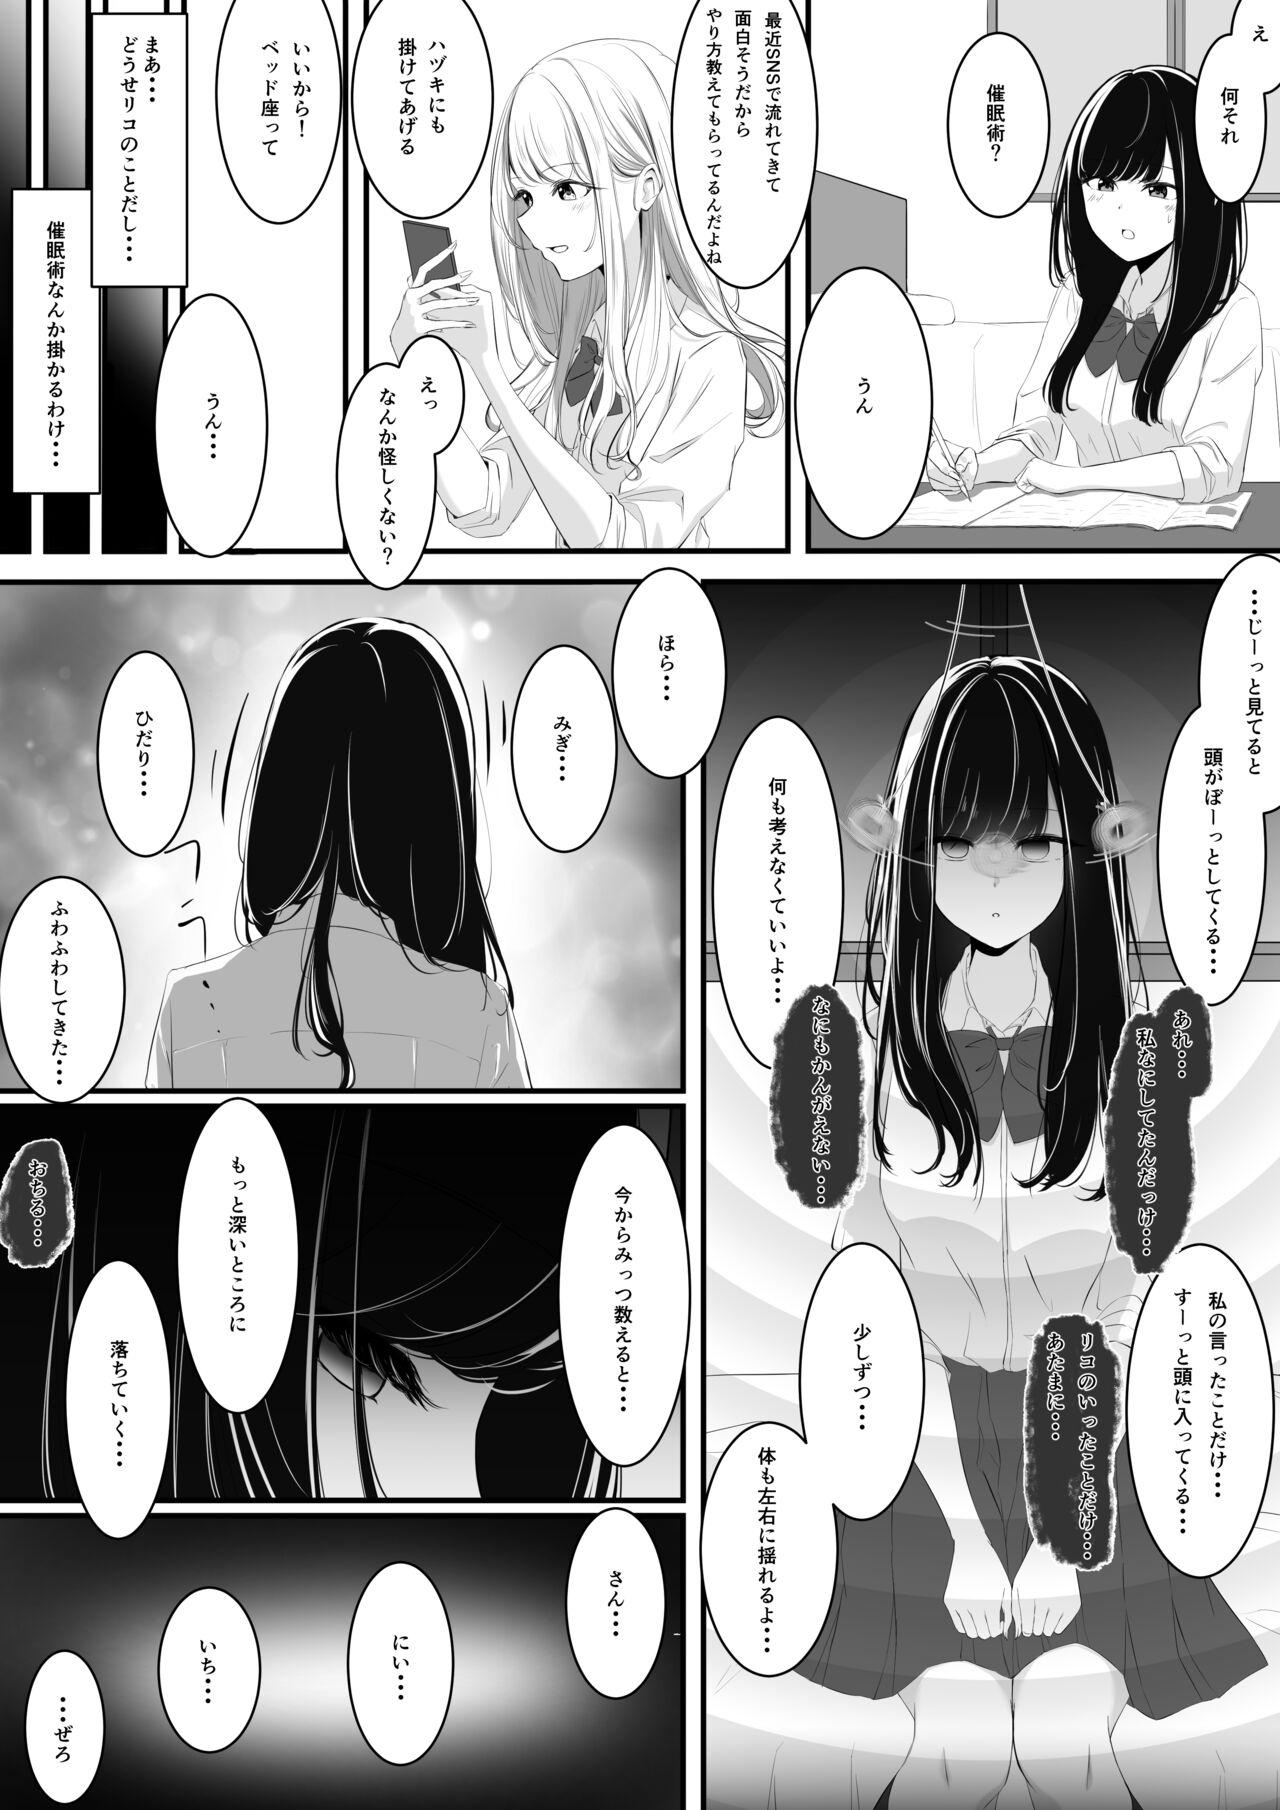 Yuri comic Part 1,2 and 3. 2